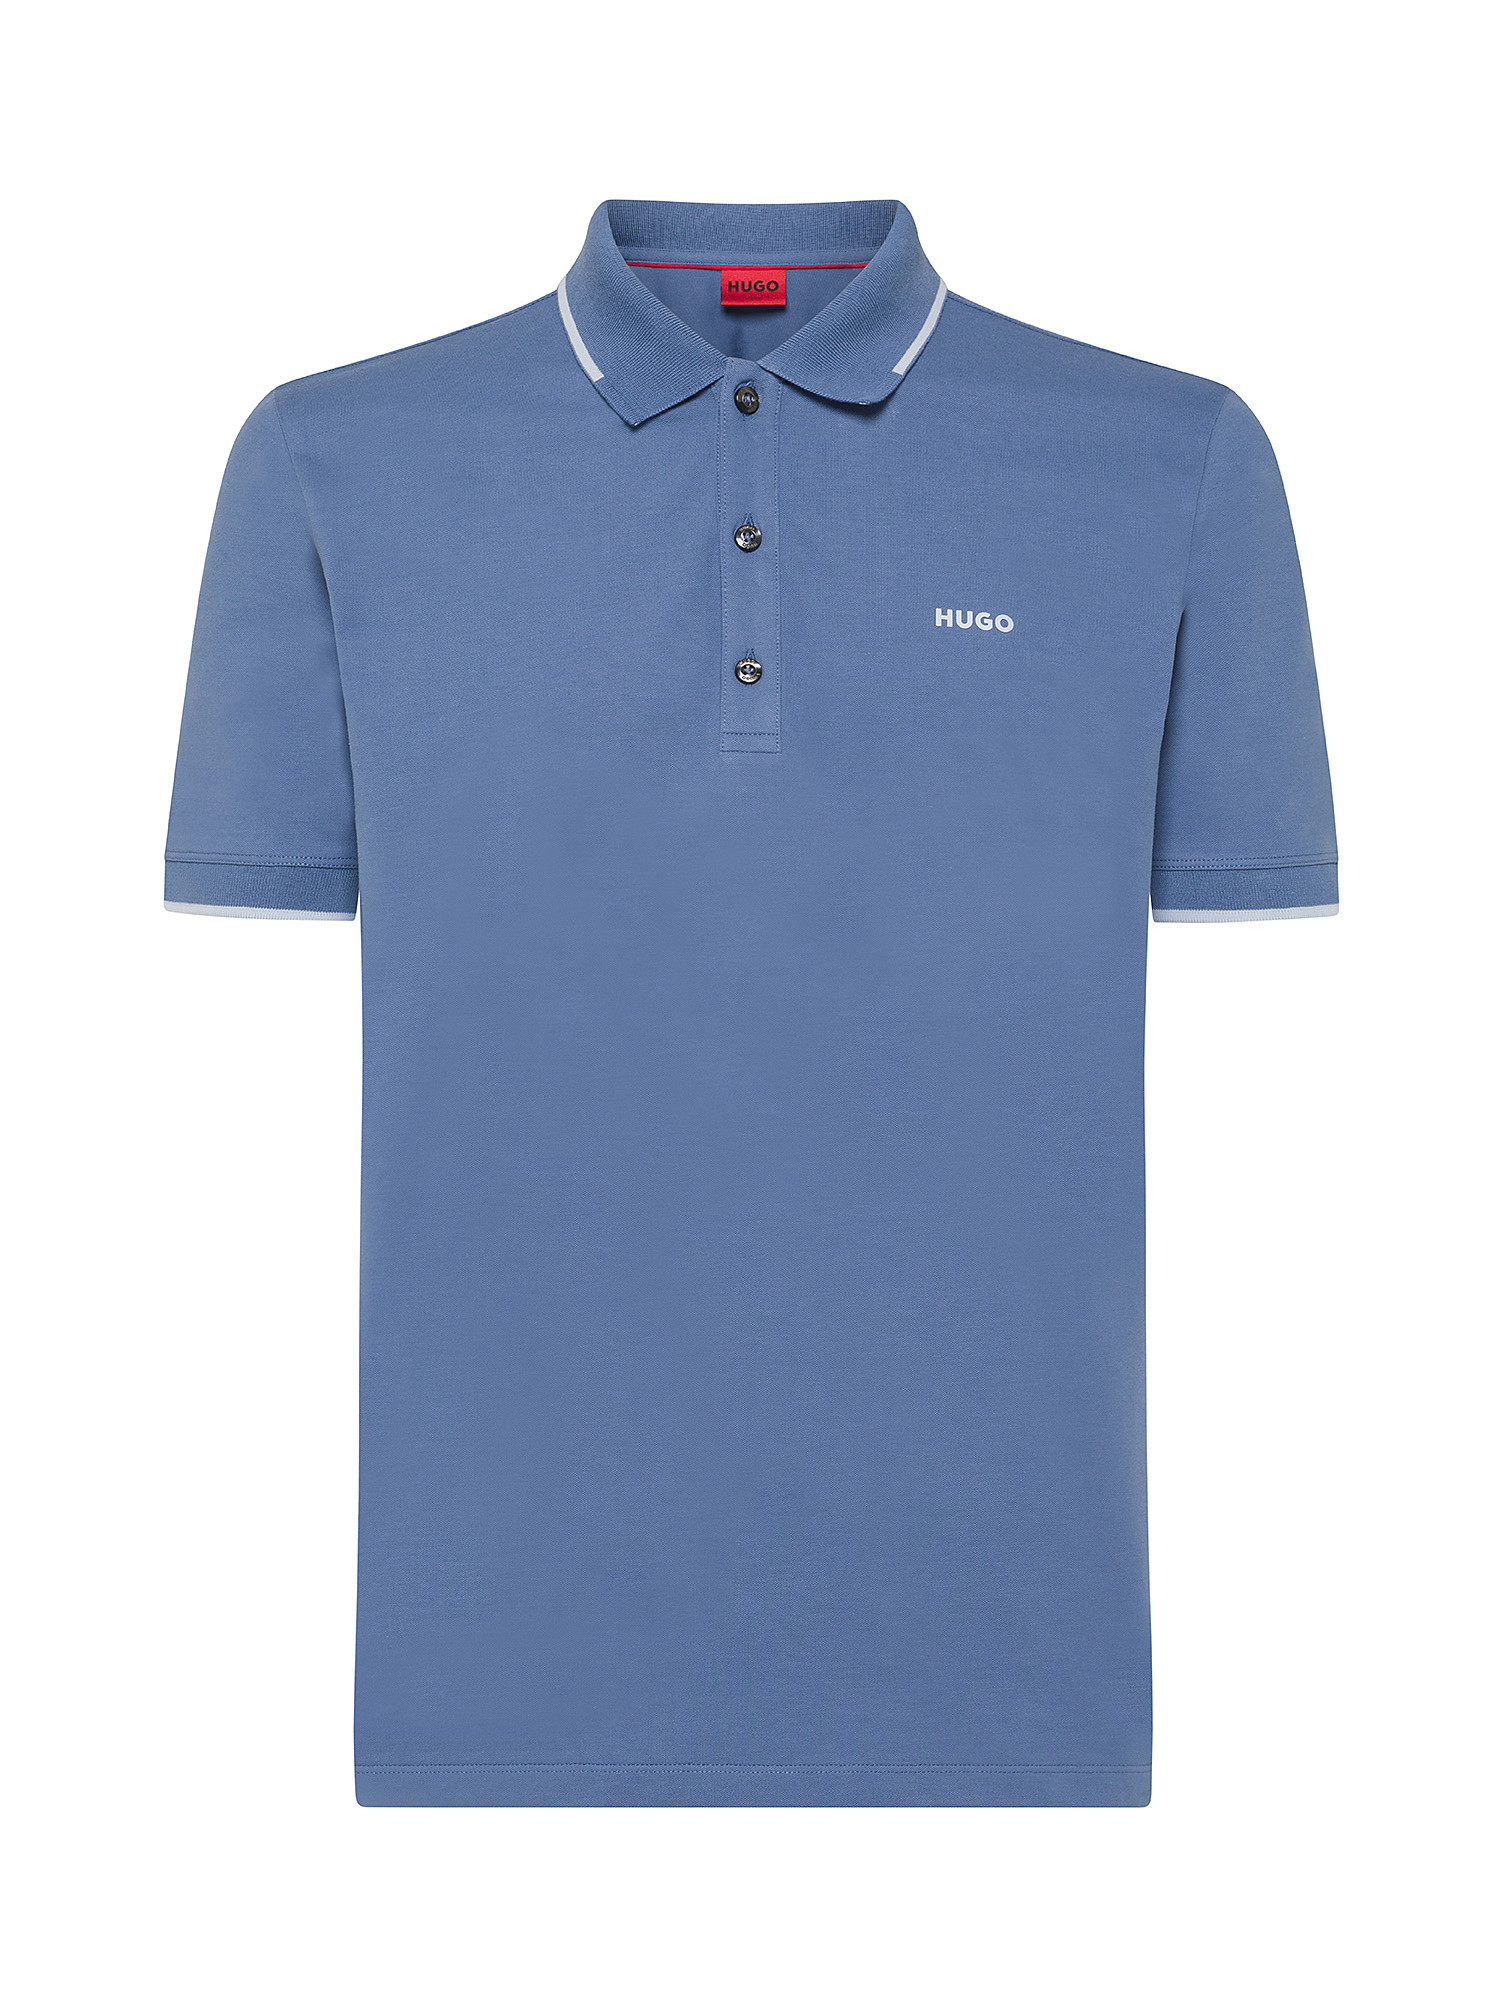 Hugo - Polo slim fit con logo in cotone, Azzurro, large image number 0